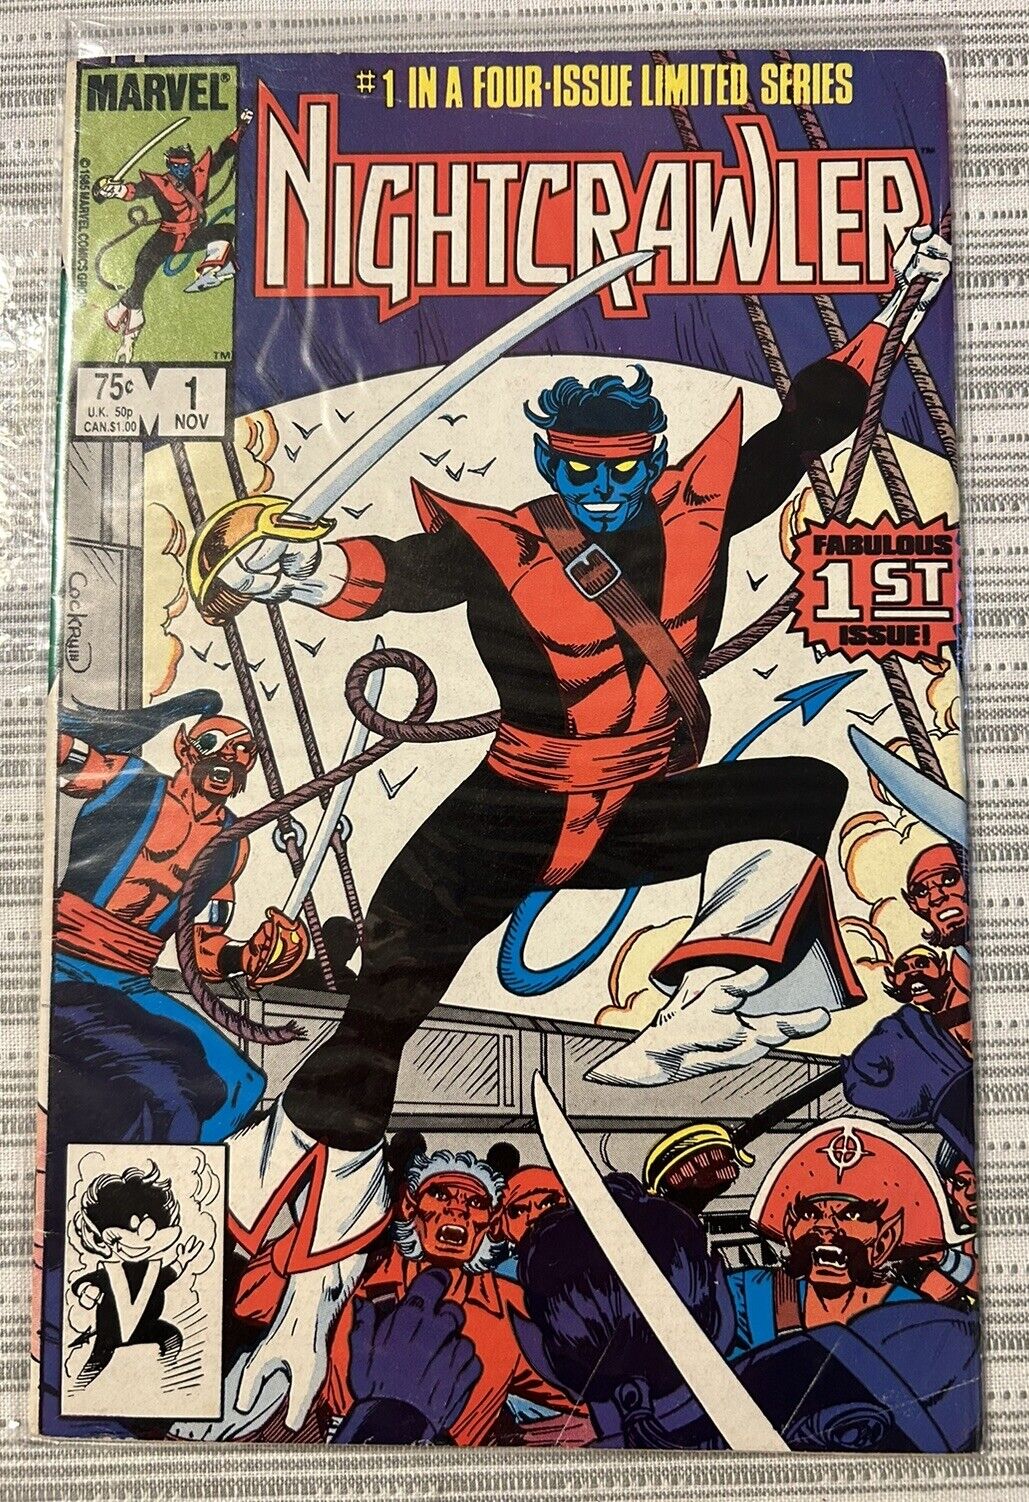 NIGHTCRAWLER #1-4 (Marvel Comics, 1985) Limited Series Complete SET #1 2 3 4